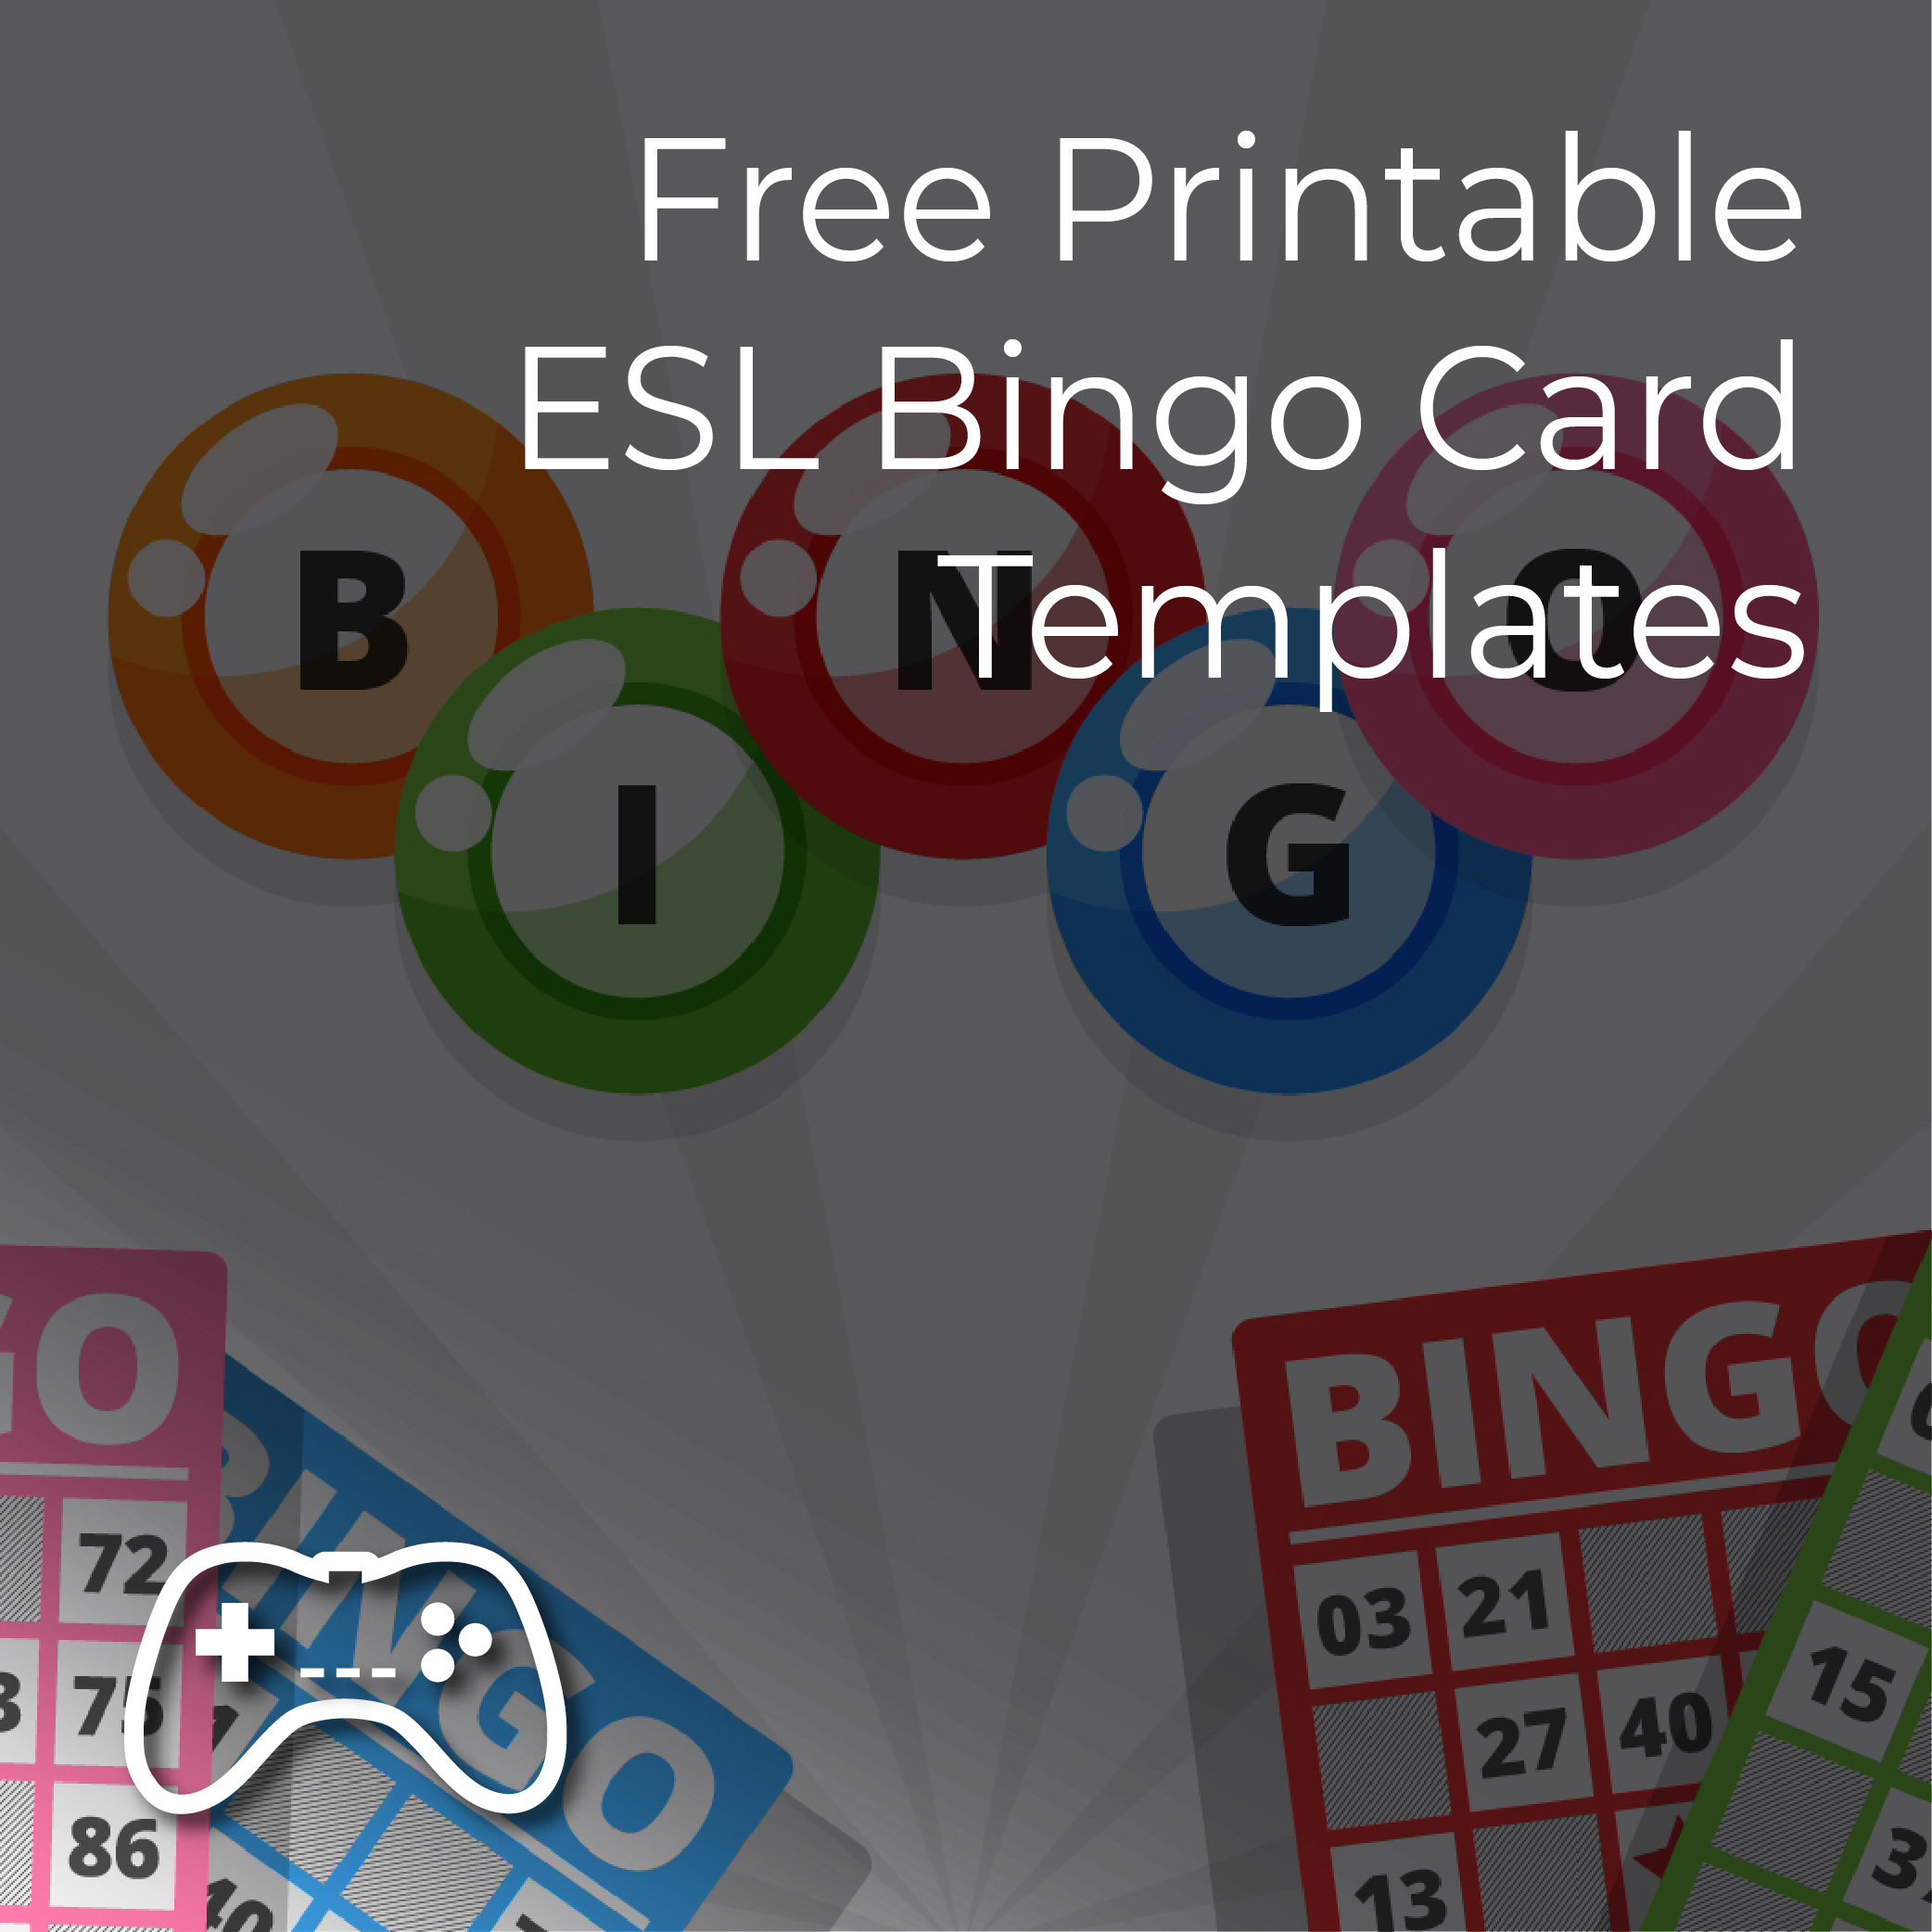 free-printable-esl-bingo-card-templates-udgvirtual-formaci-n-integral